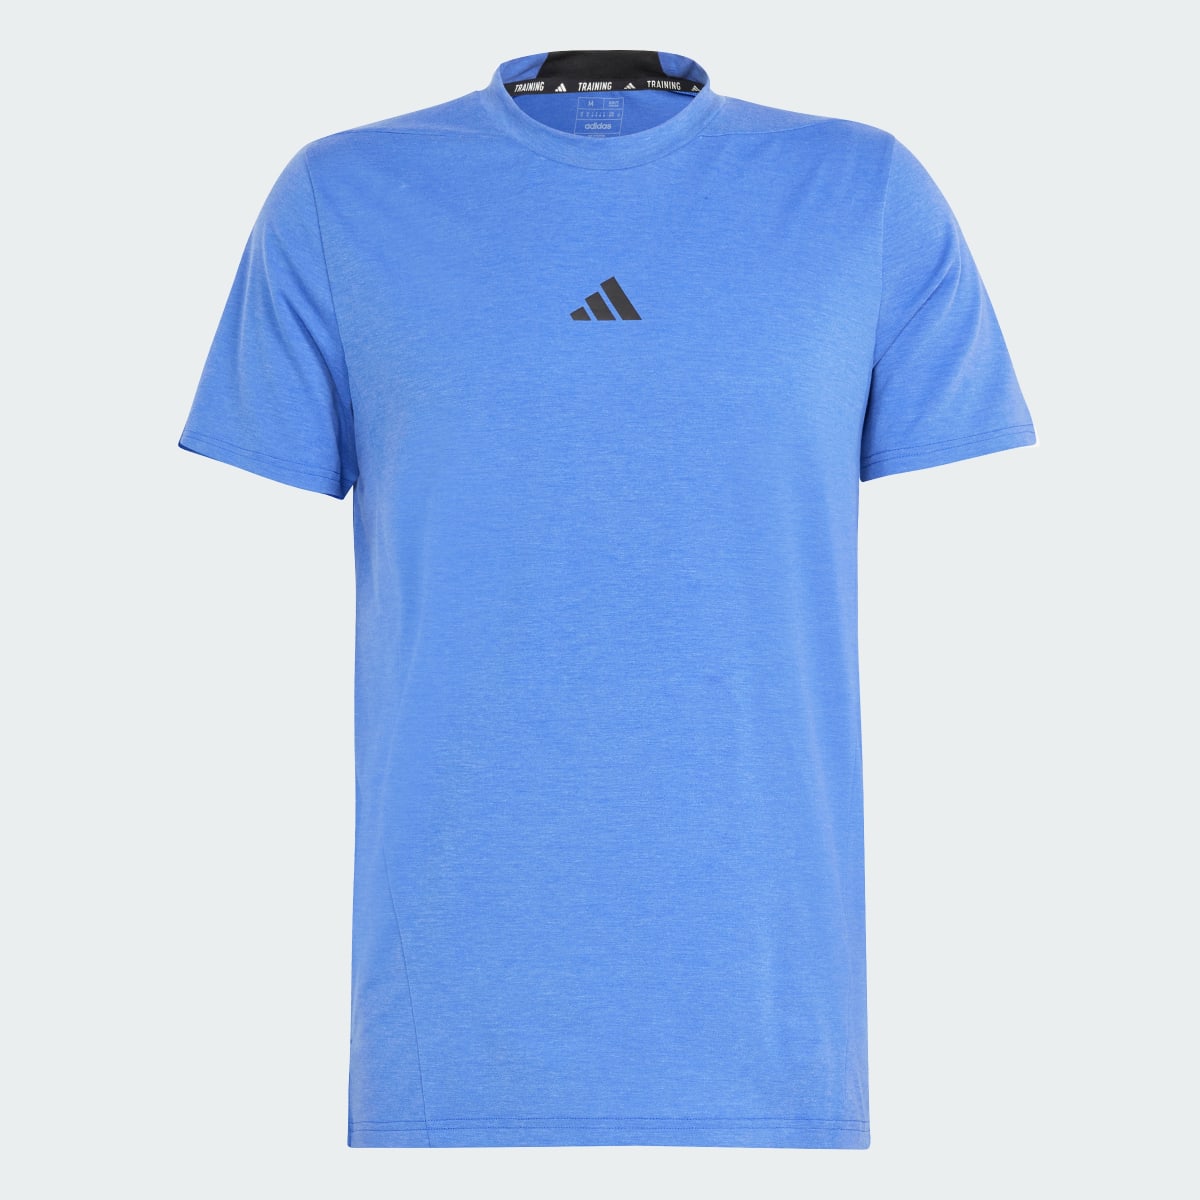 Adidas T-shirt Designed for Training. 4